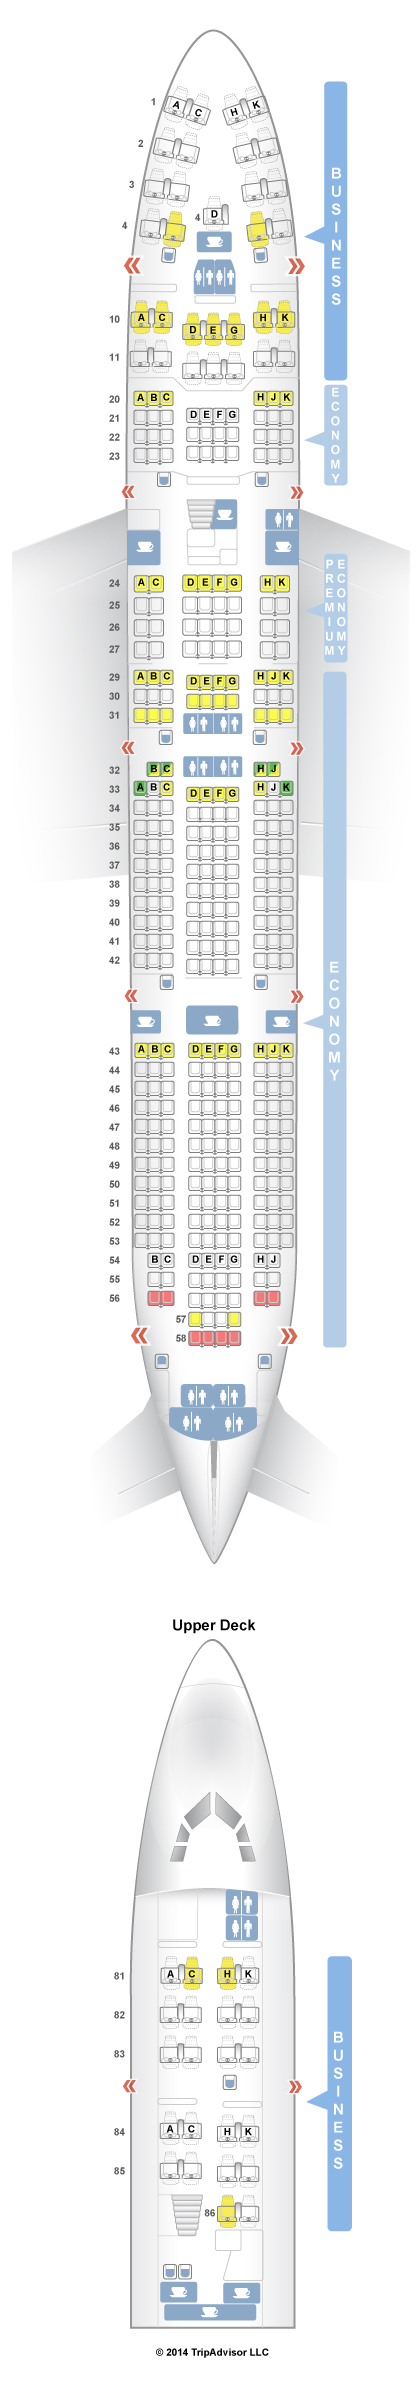 lufthansa seat map 747 400